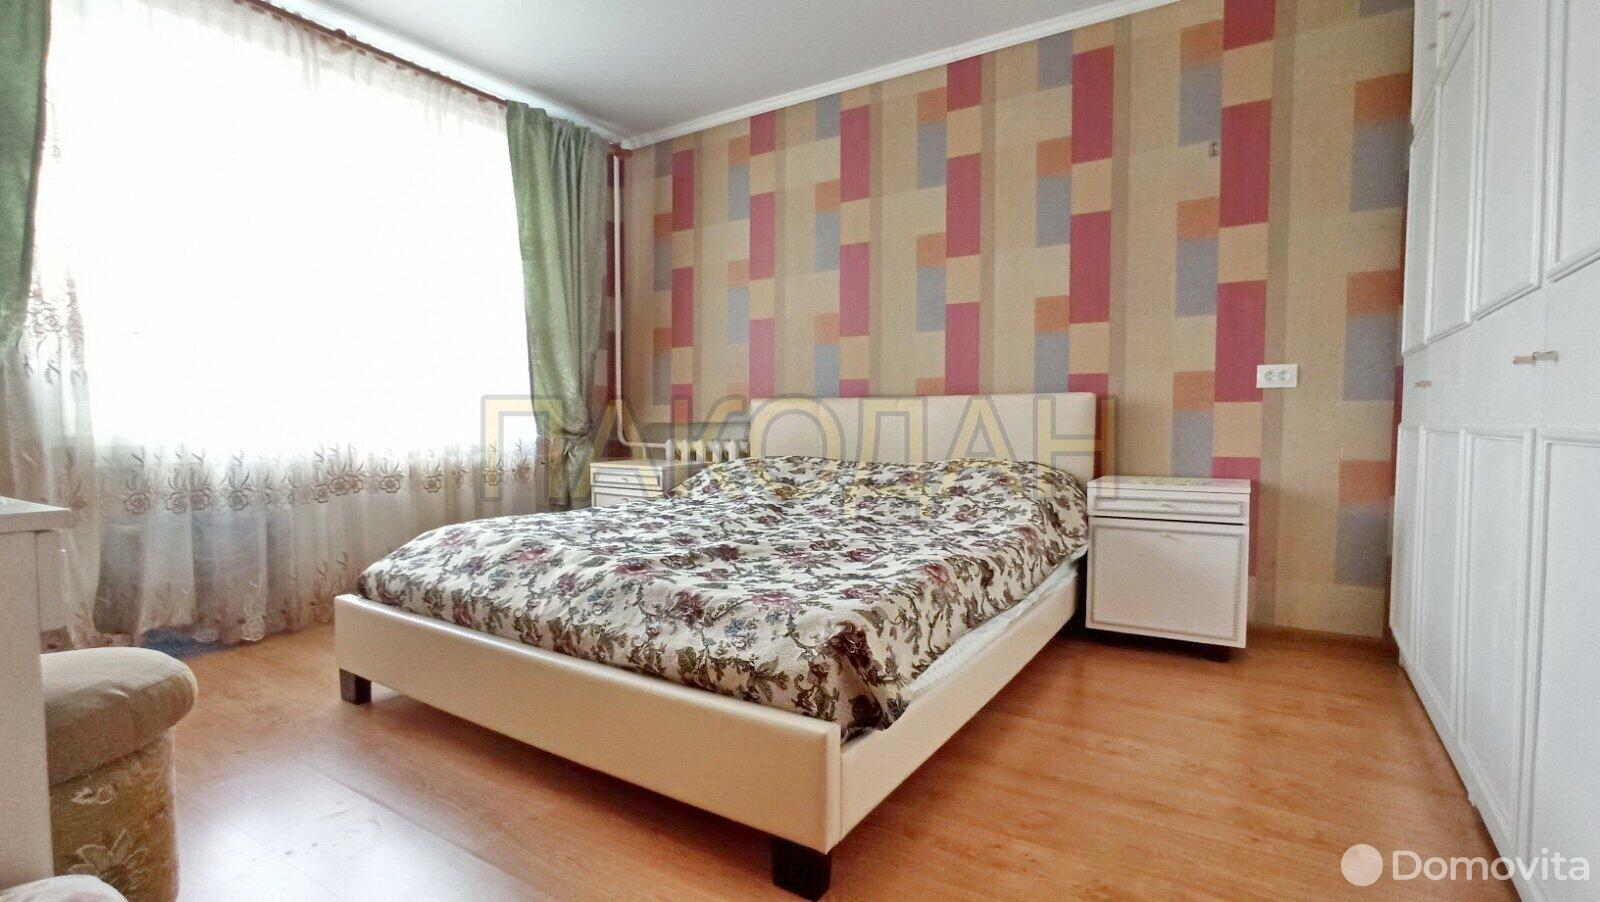 квартира, Барановичи, ул. Баранова, стоимость продажи 149 056 р.